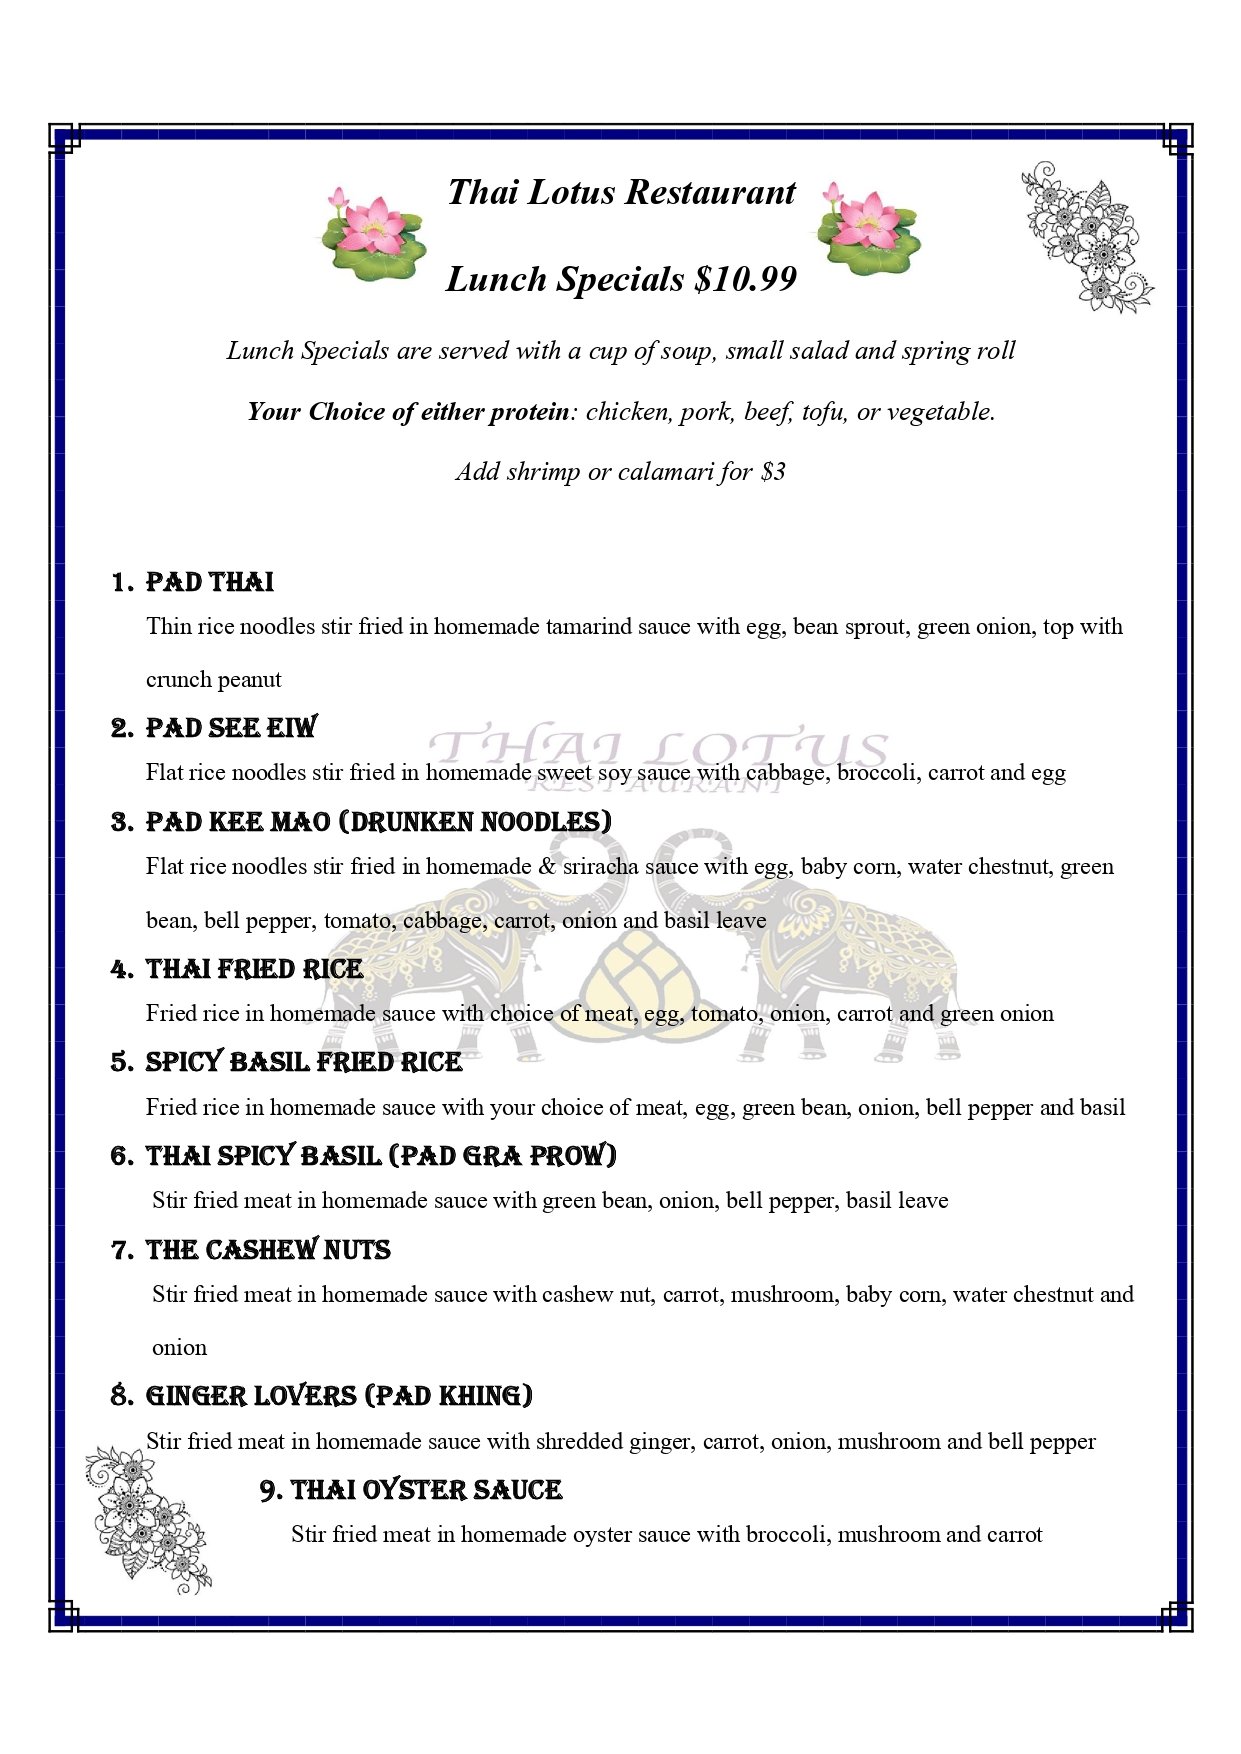 Thai Lotus lunch specials menu_page-0001.jpg